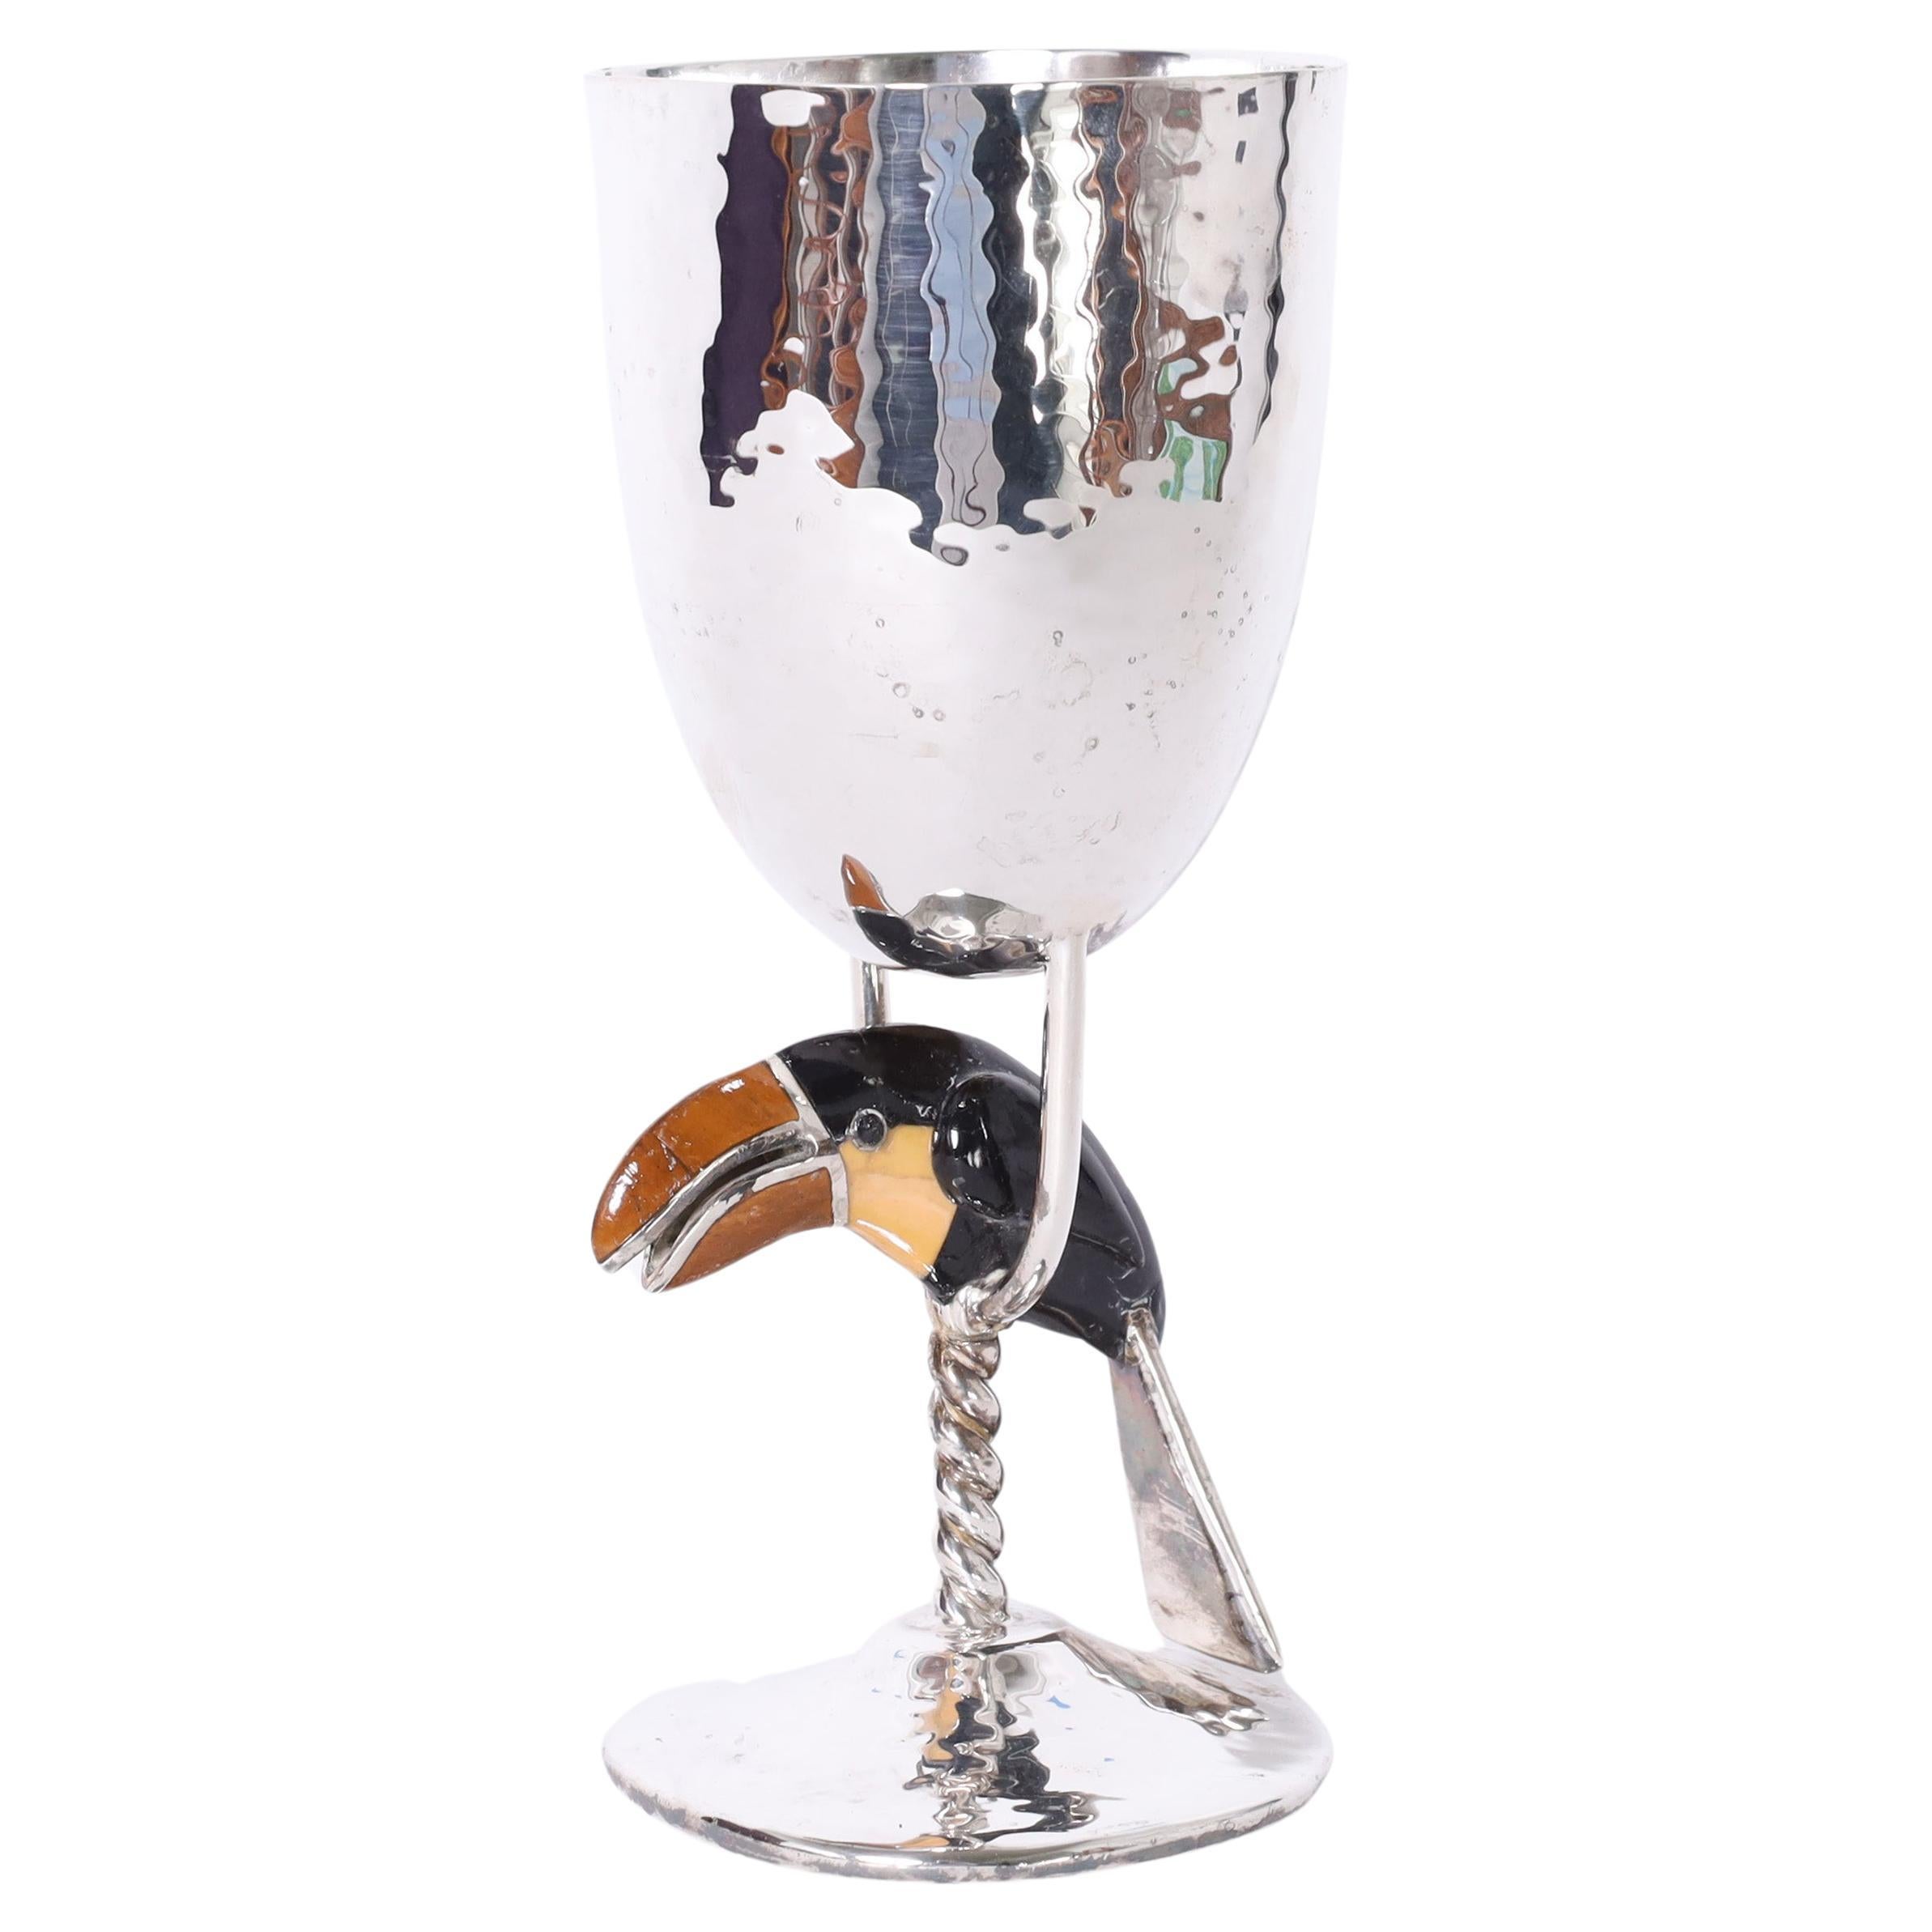 Vintage Silver Plate Cup or Chalice by Emilia Castillo